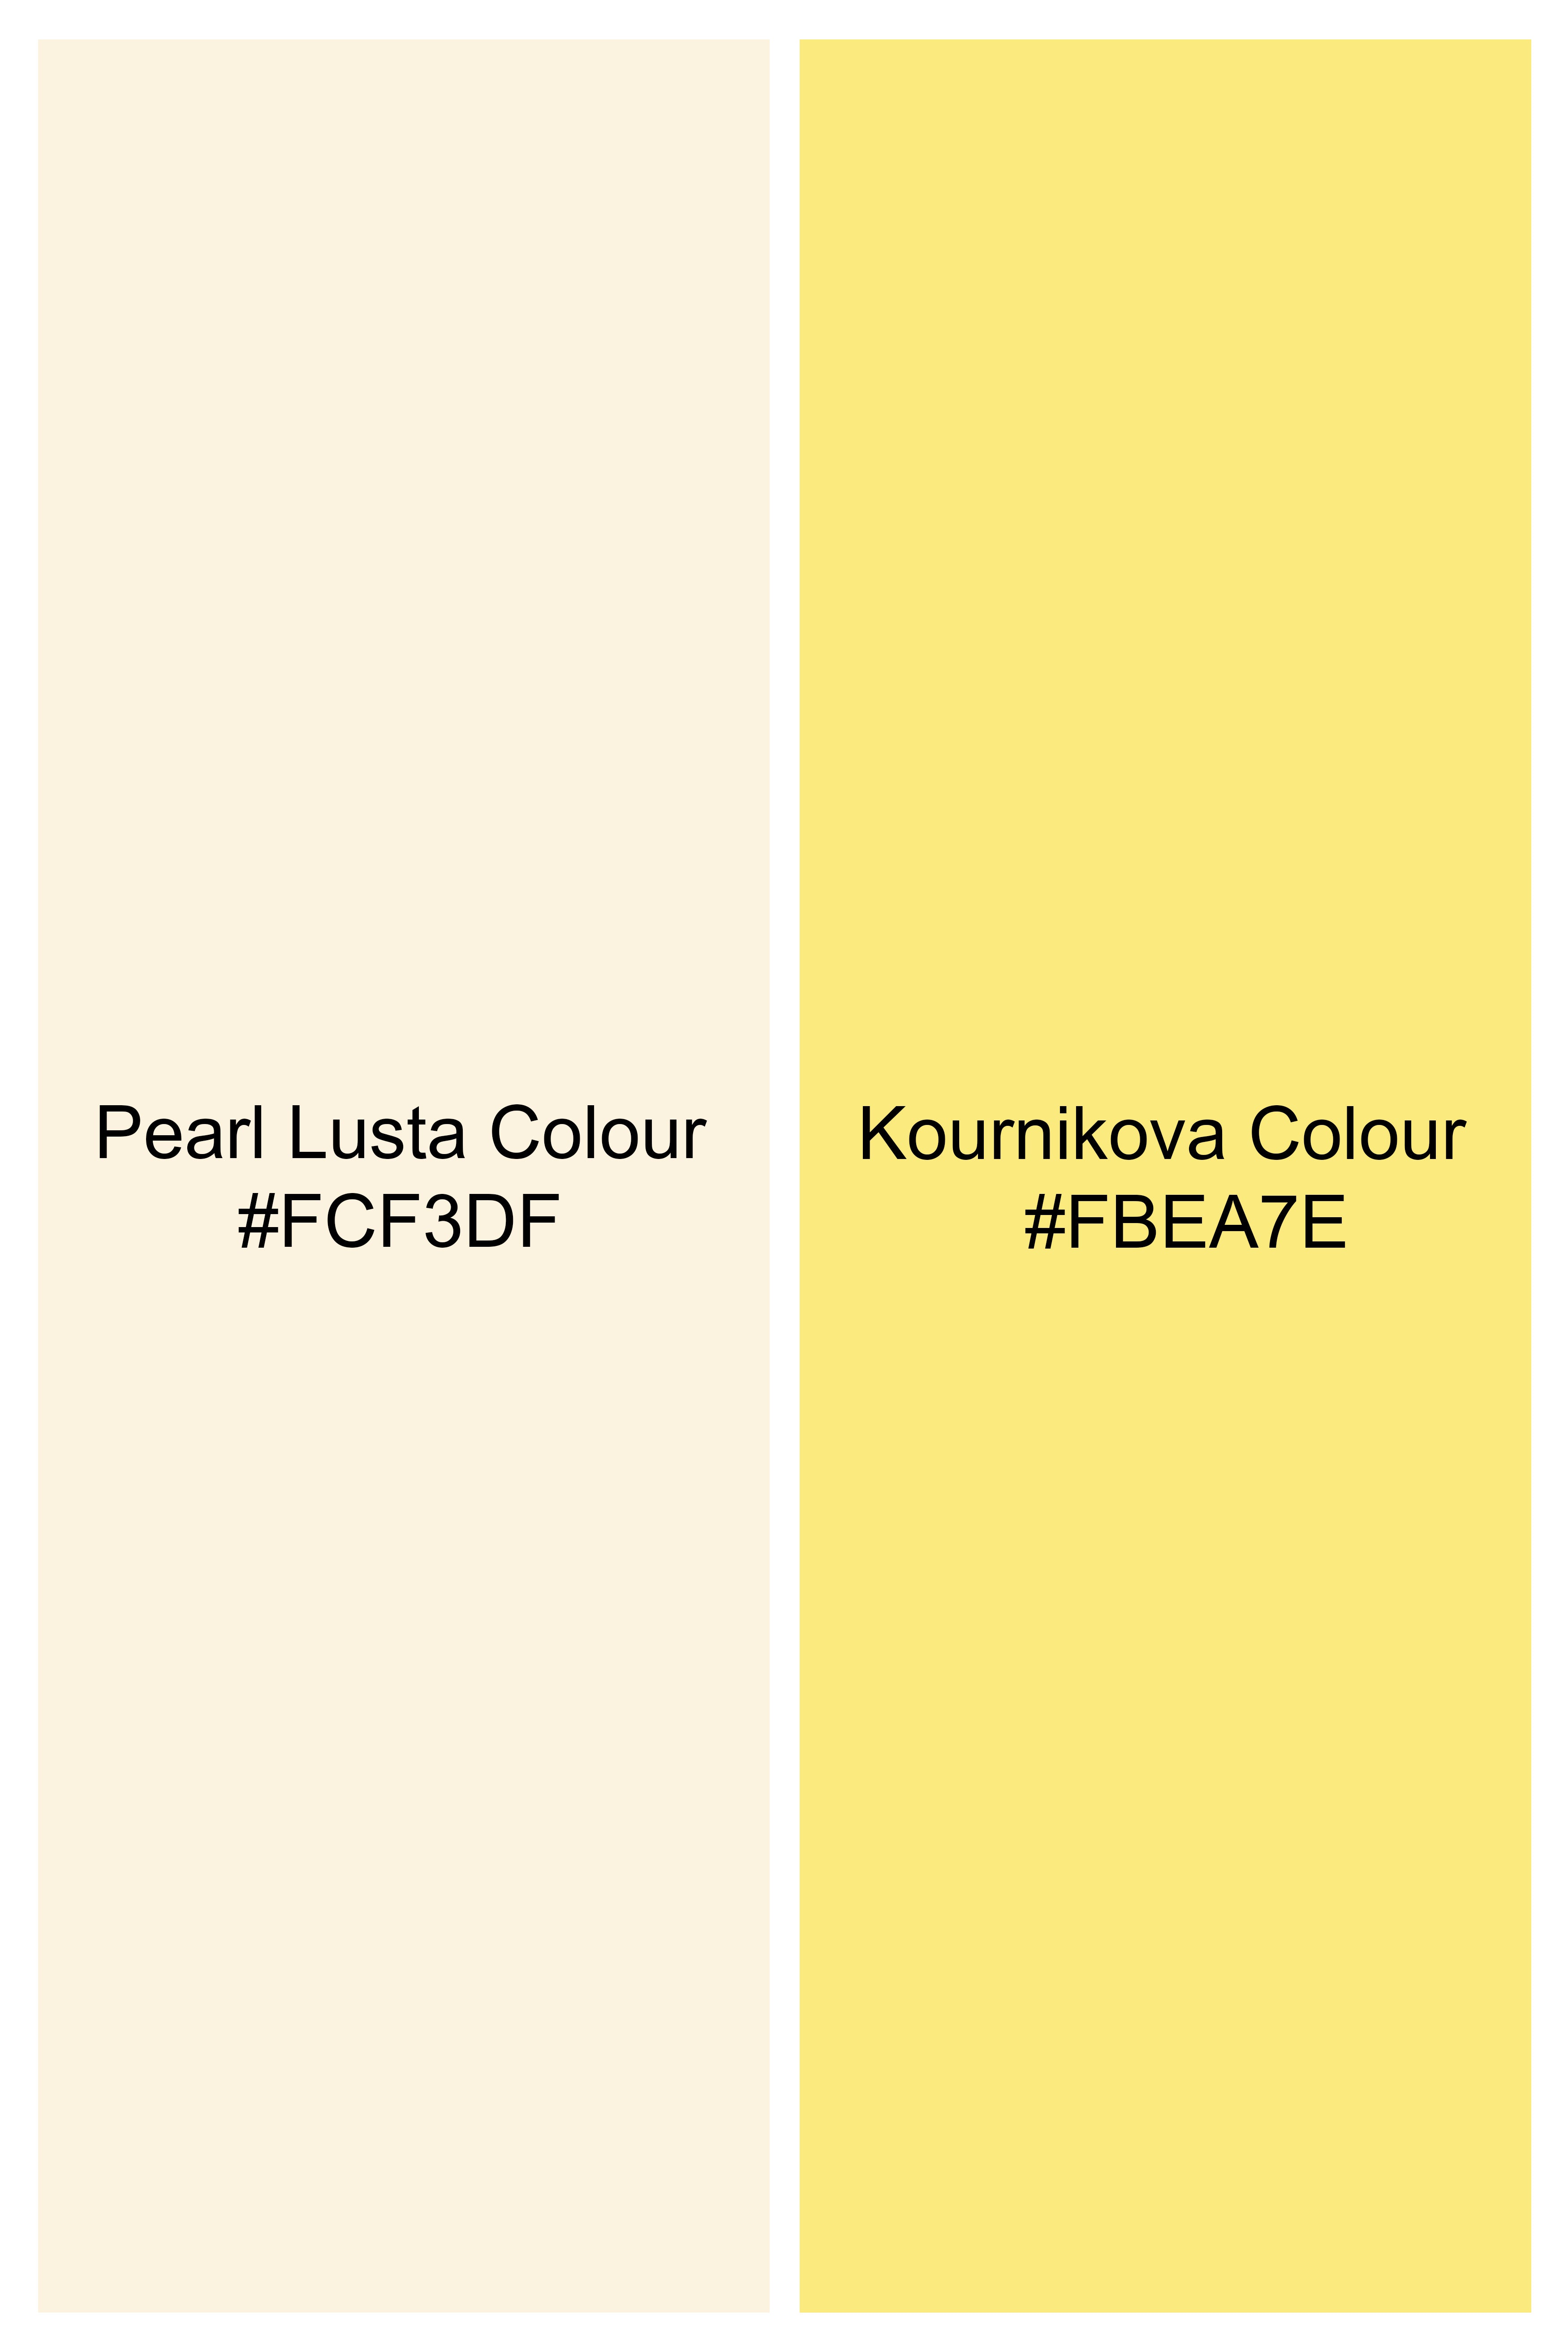 Kournikova Yellow with Pearl Lusta Beige Paisley Jacquard Tie with Pocket Square TP043